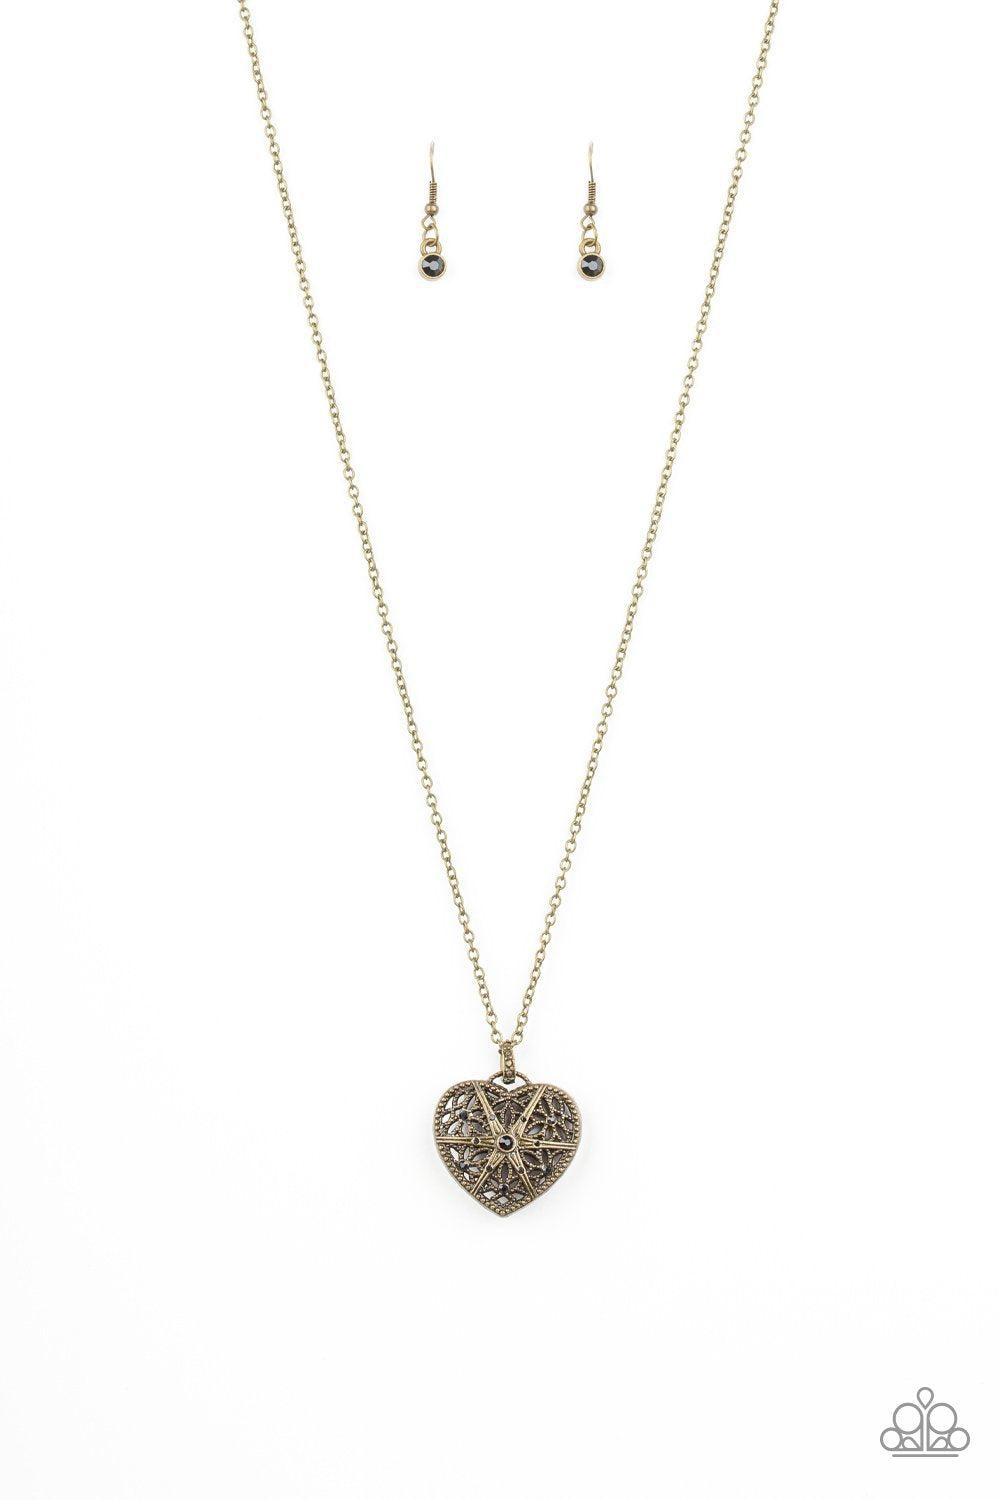 Casanova Charm Black Rhinestone and Brass Heart Necklace - Paparazzi Accessories - lightbox -CarasShop.com - $5 Jewelry by Cara Jewels